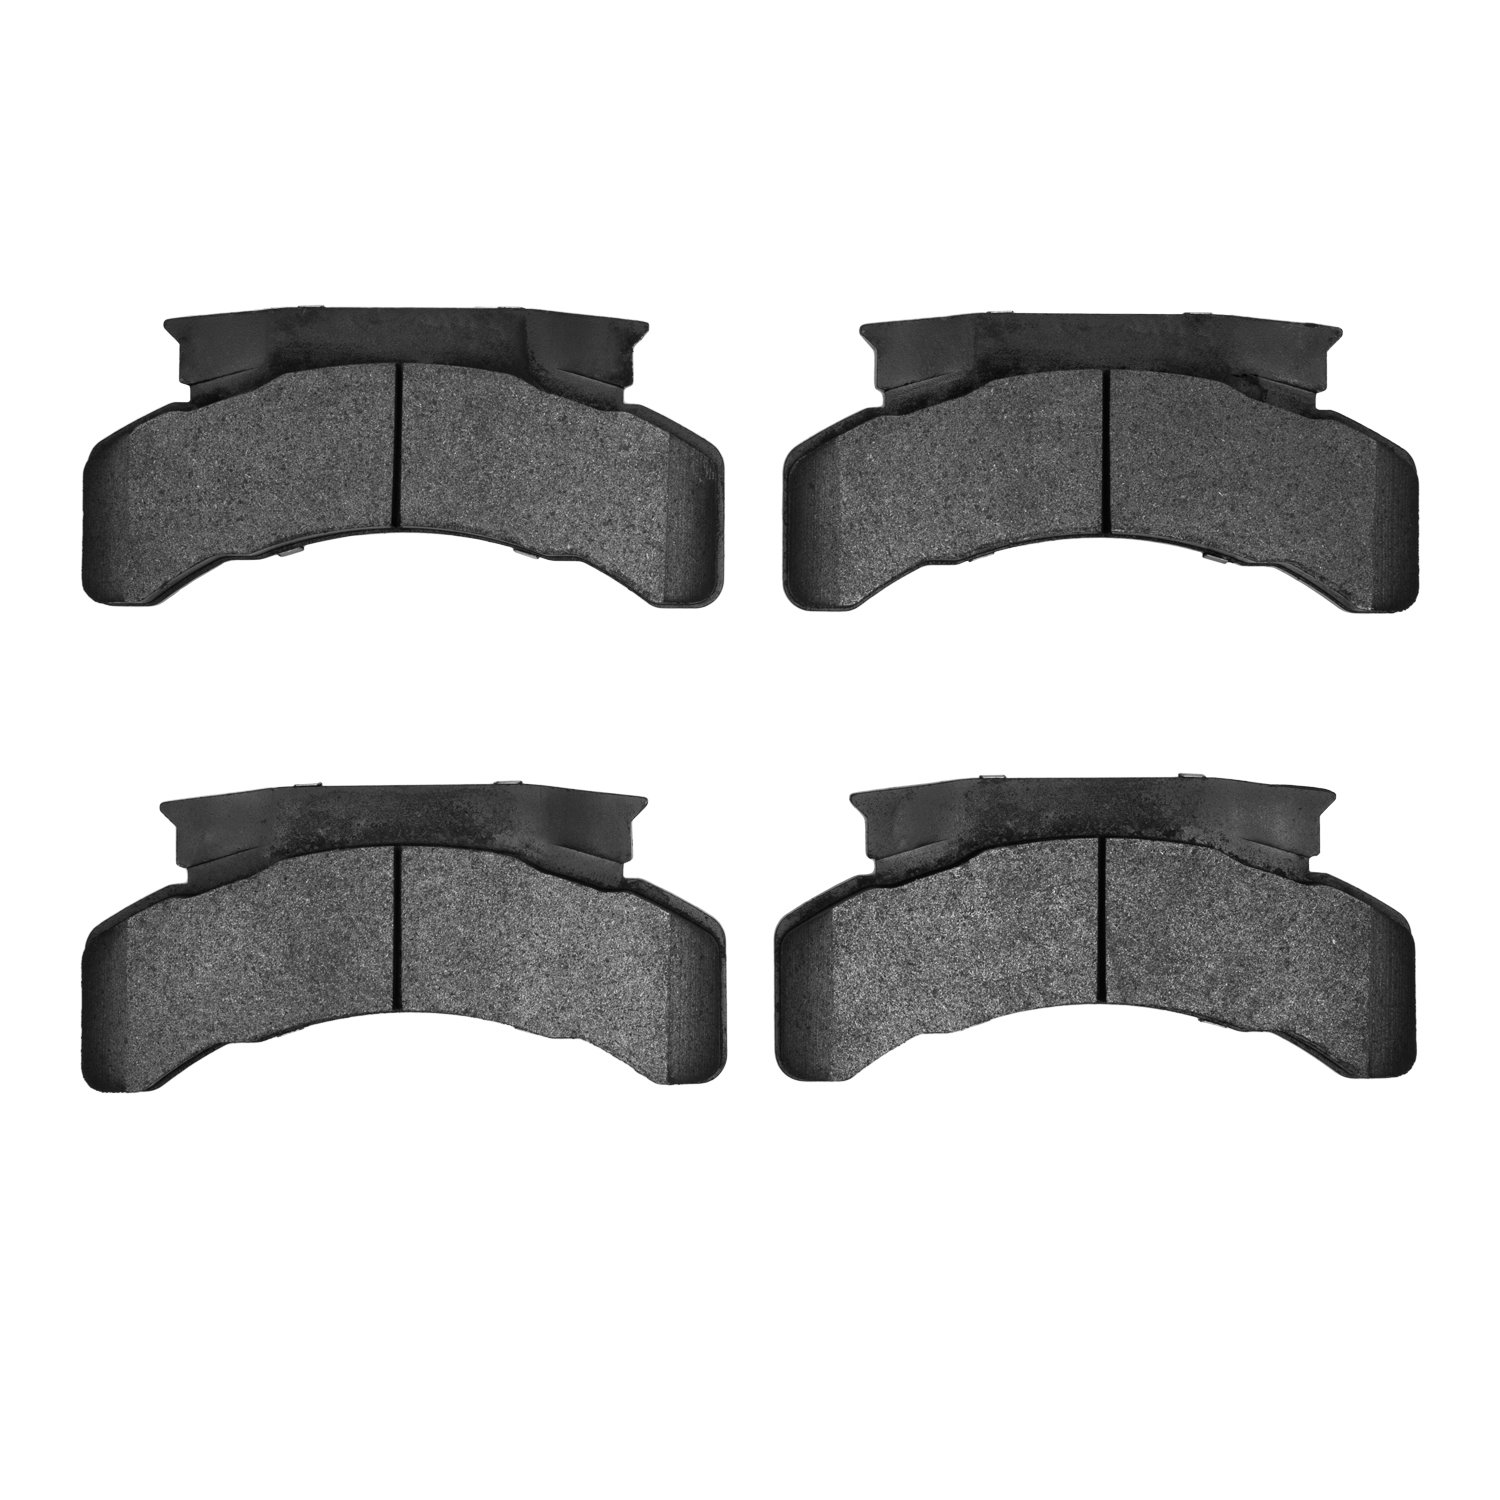 Super-Duty Brake Pads, 1979-2012 Fits Multiple Makes/Models, Position: Front & Rear